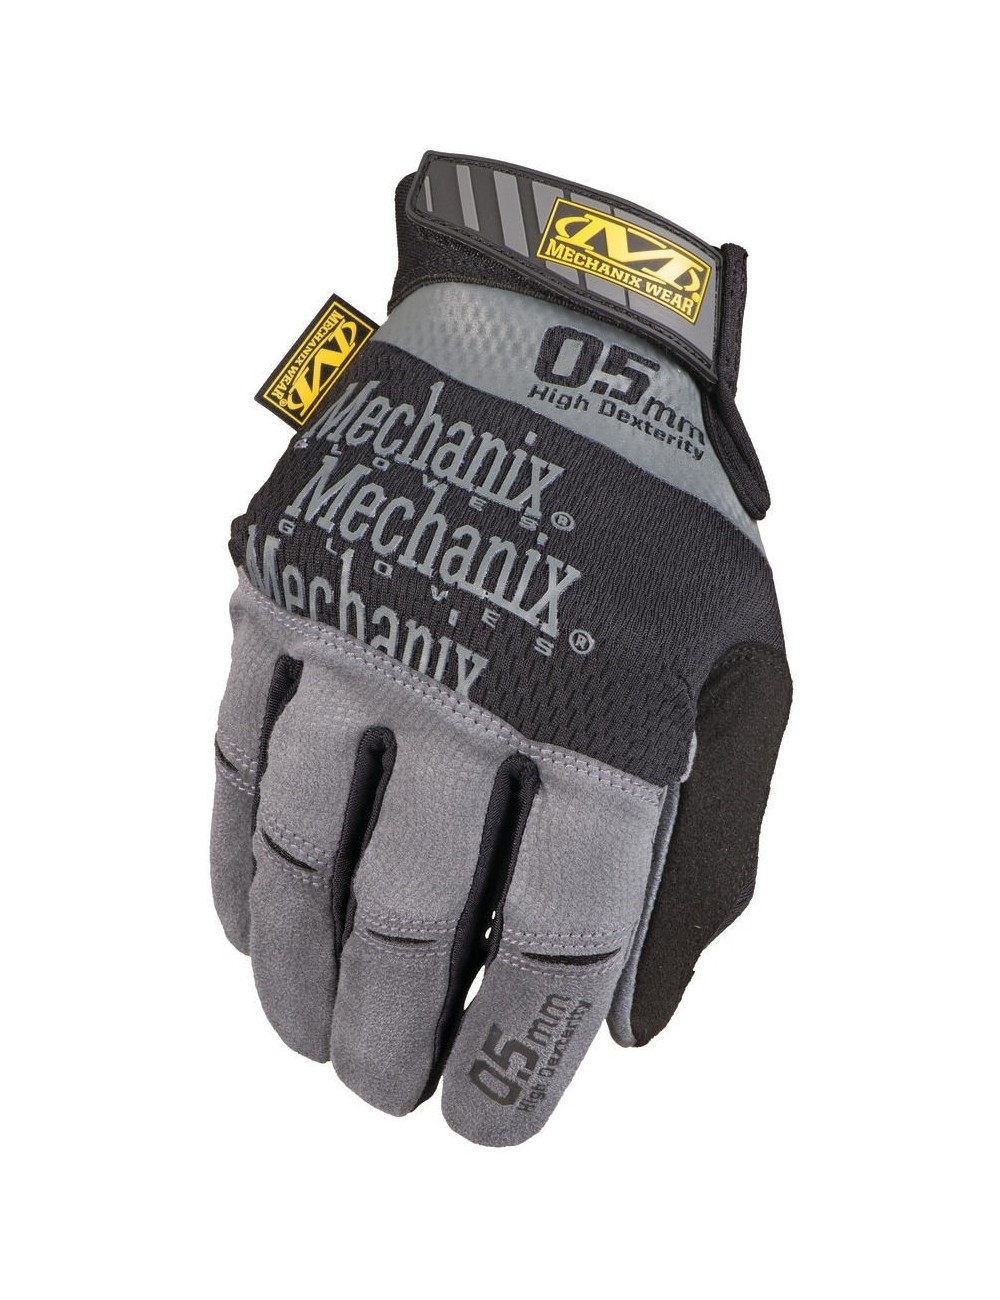 Mechanix Speciality 0.5mm gloves